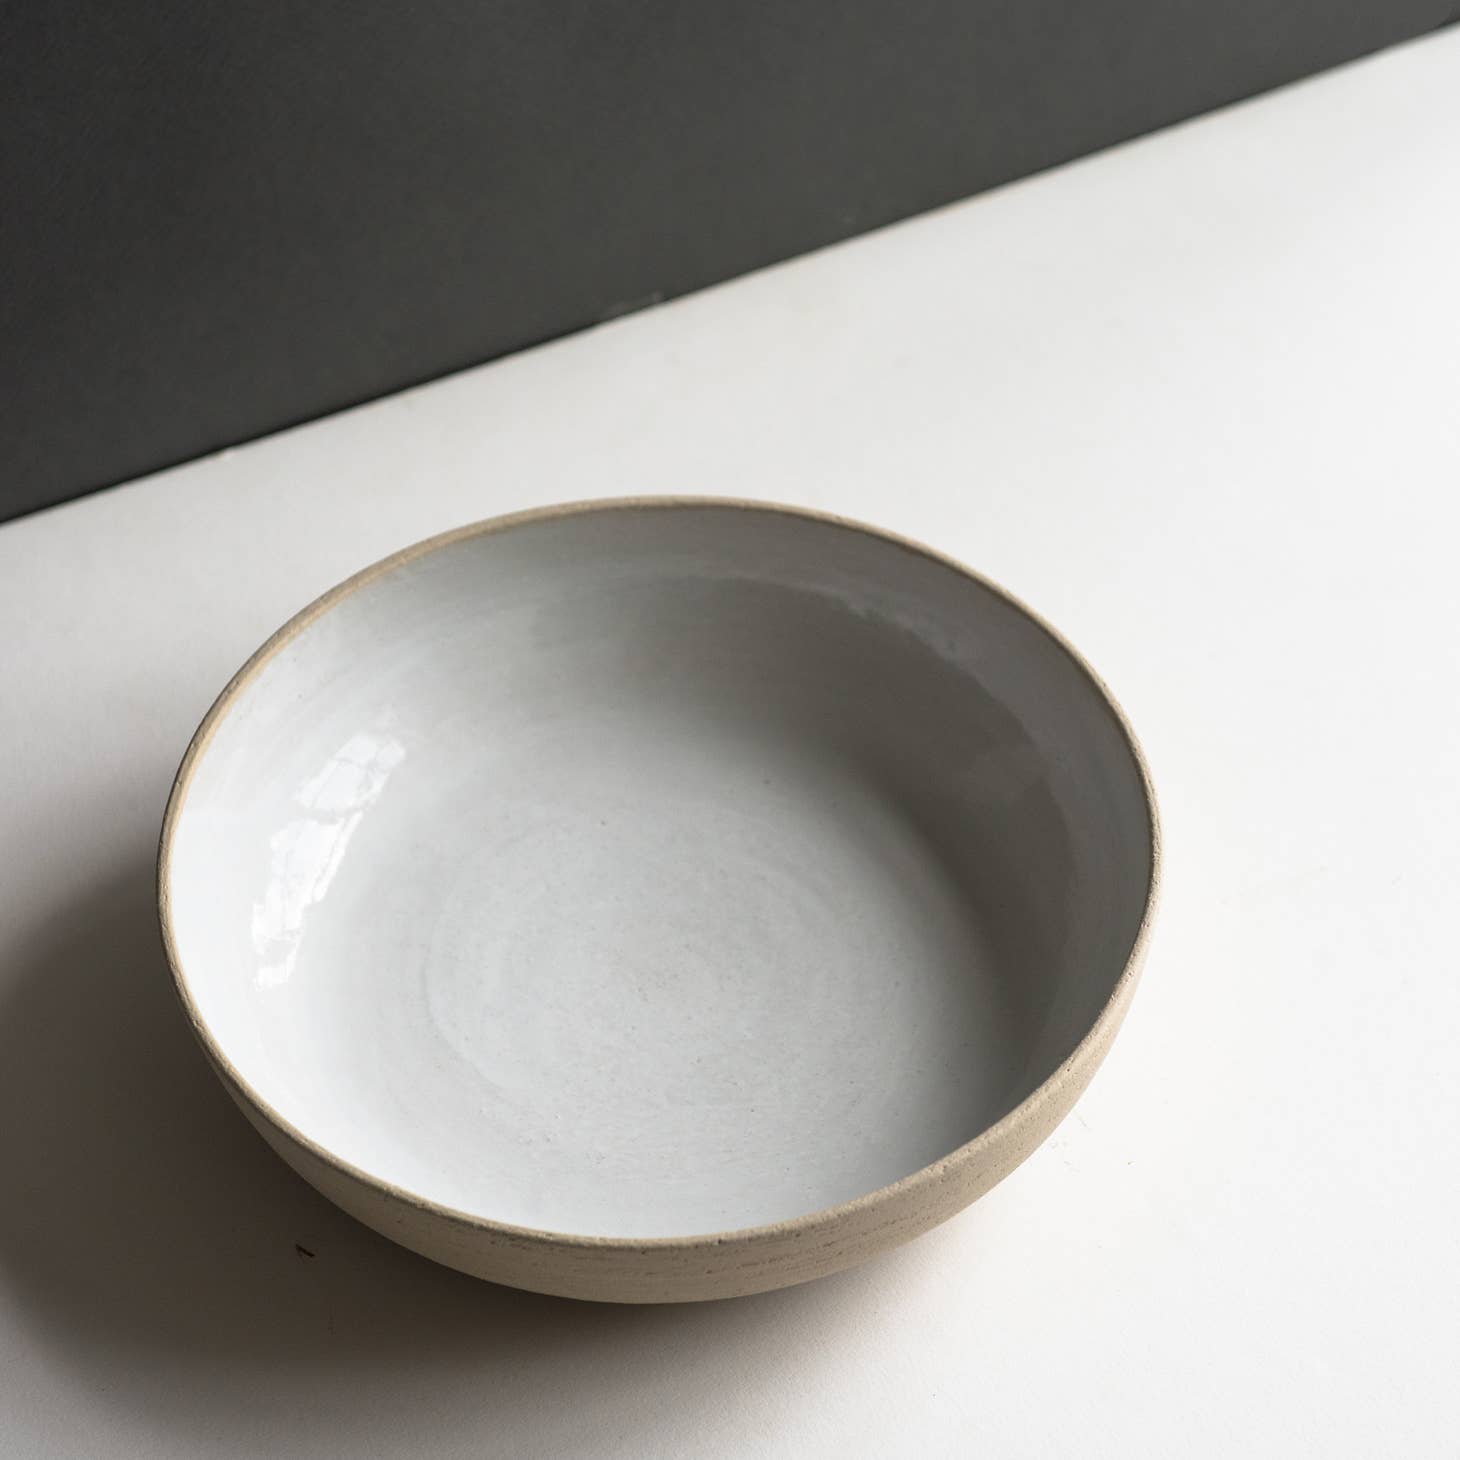 Ethical Trade Co Tabletop Salad Bowl / Grey Handmade Ukrainian Stoneware Bowl